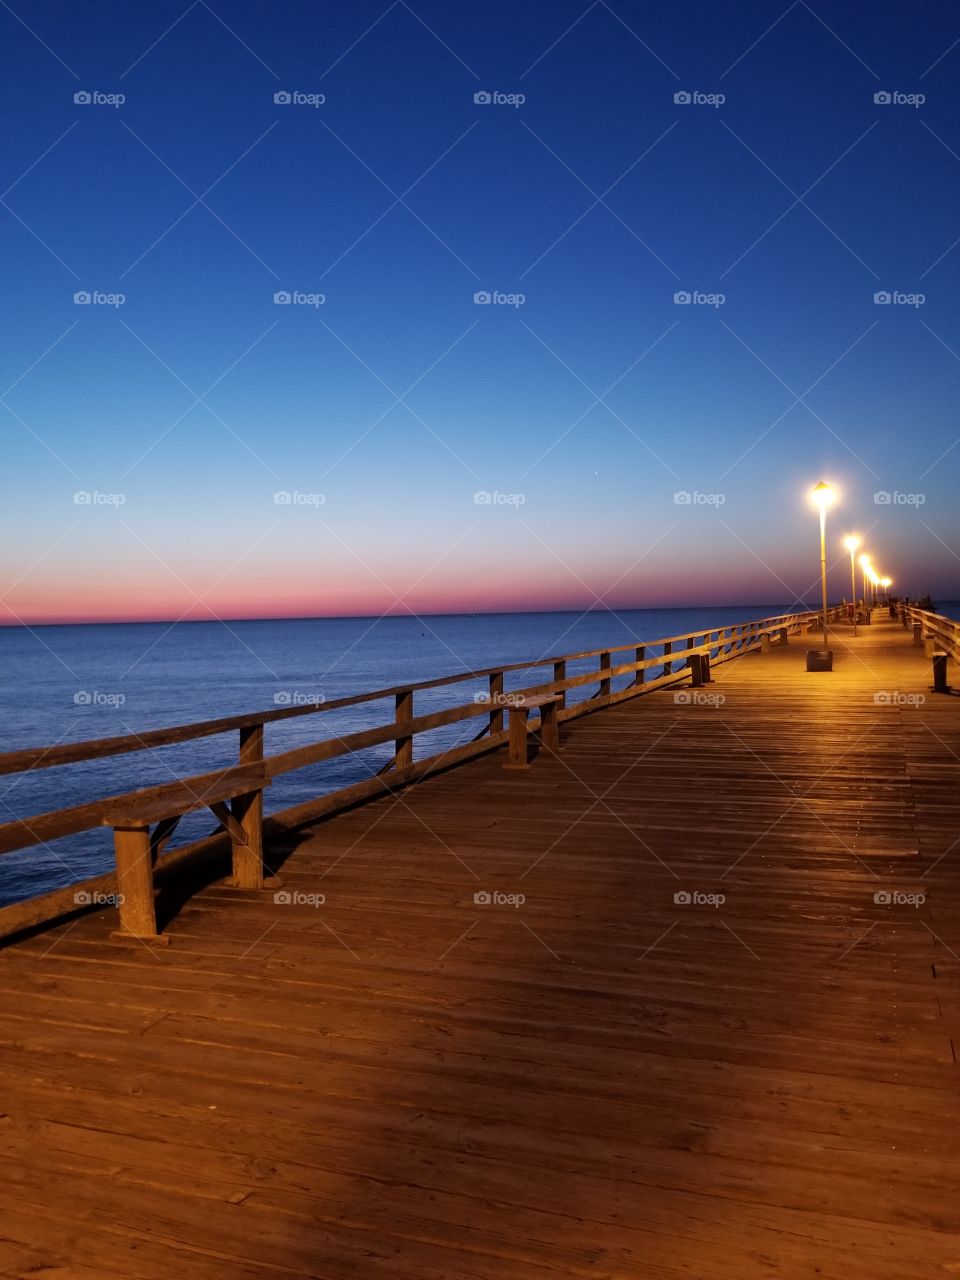 A night's walk on the pier